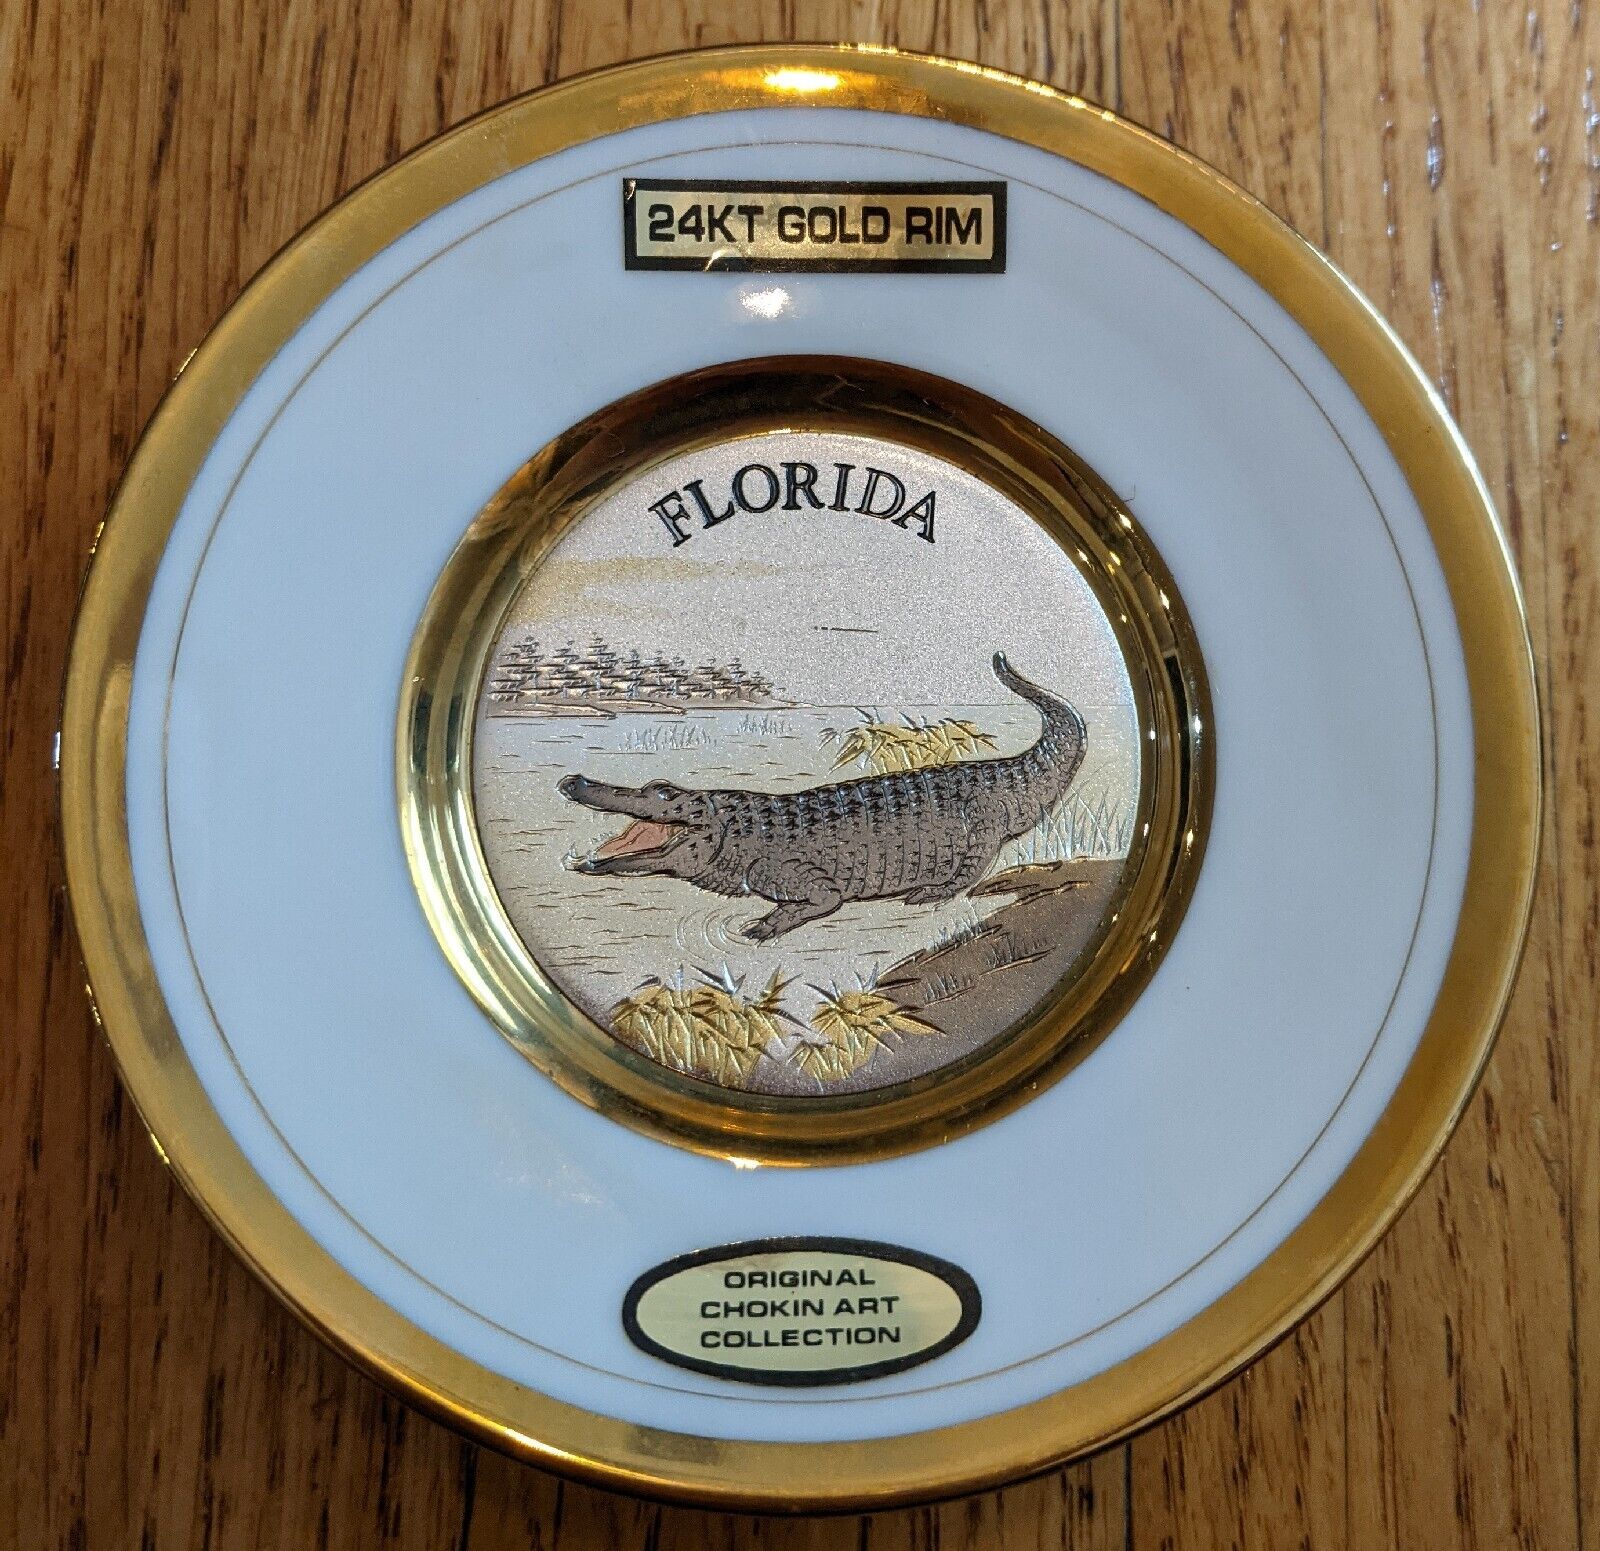 Chokin Florida Gator Japanese Plate 24KT Gold Rim Silver White Engraved China